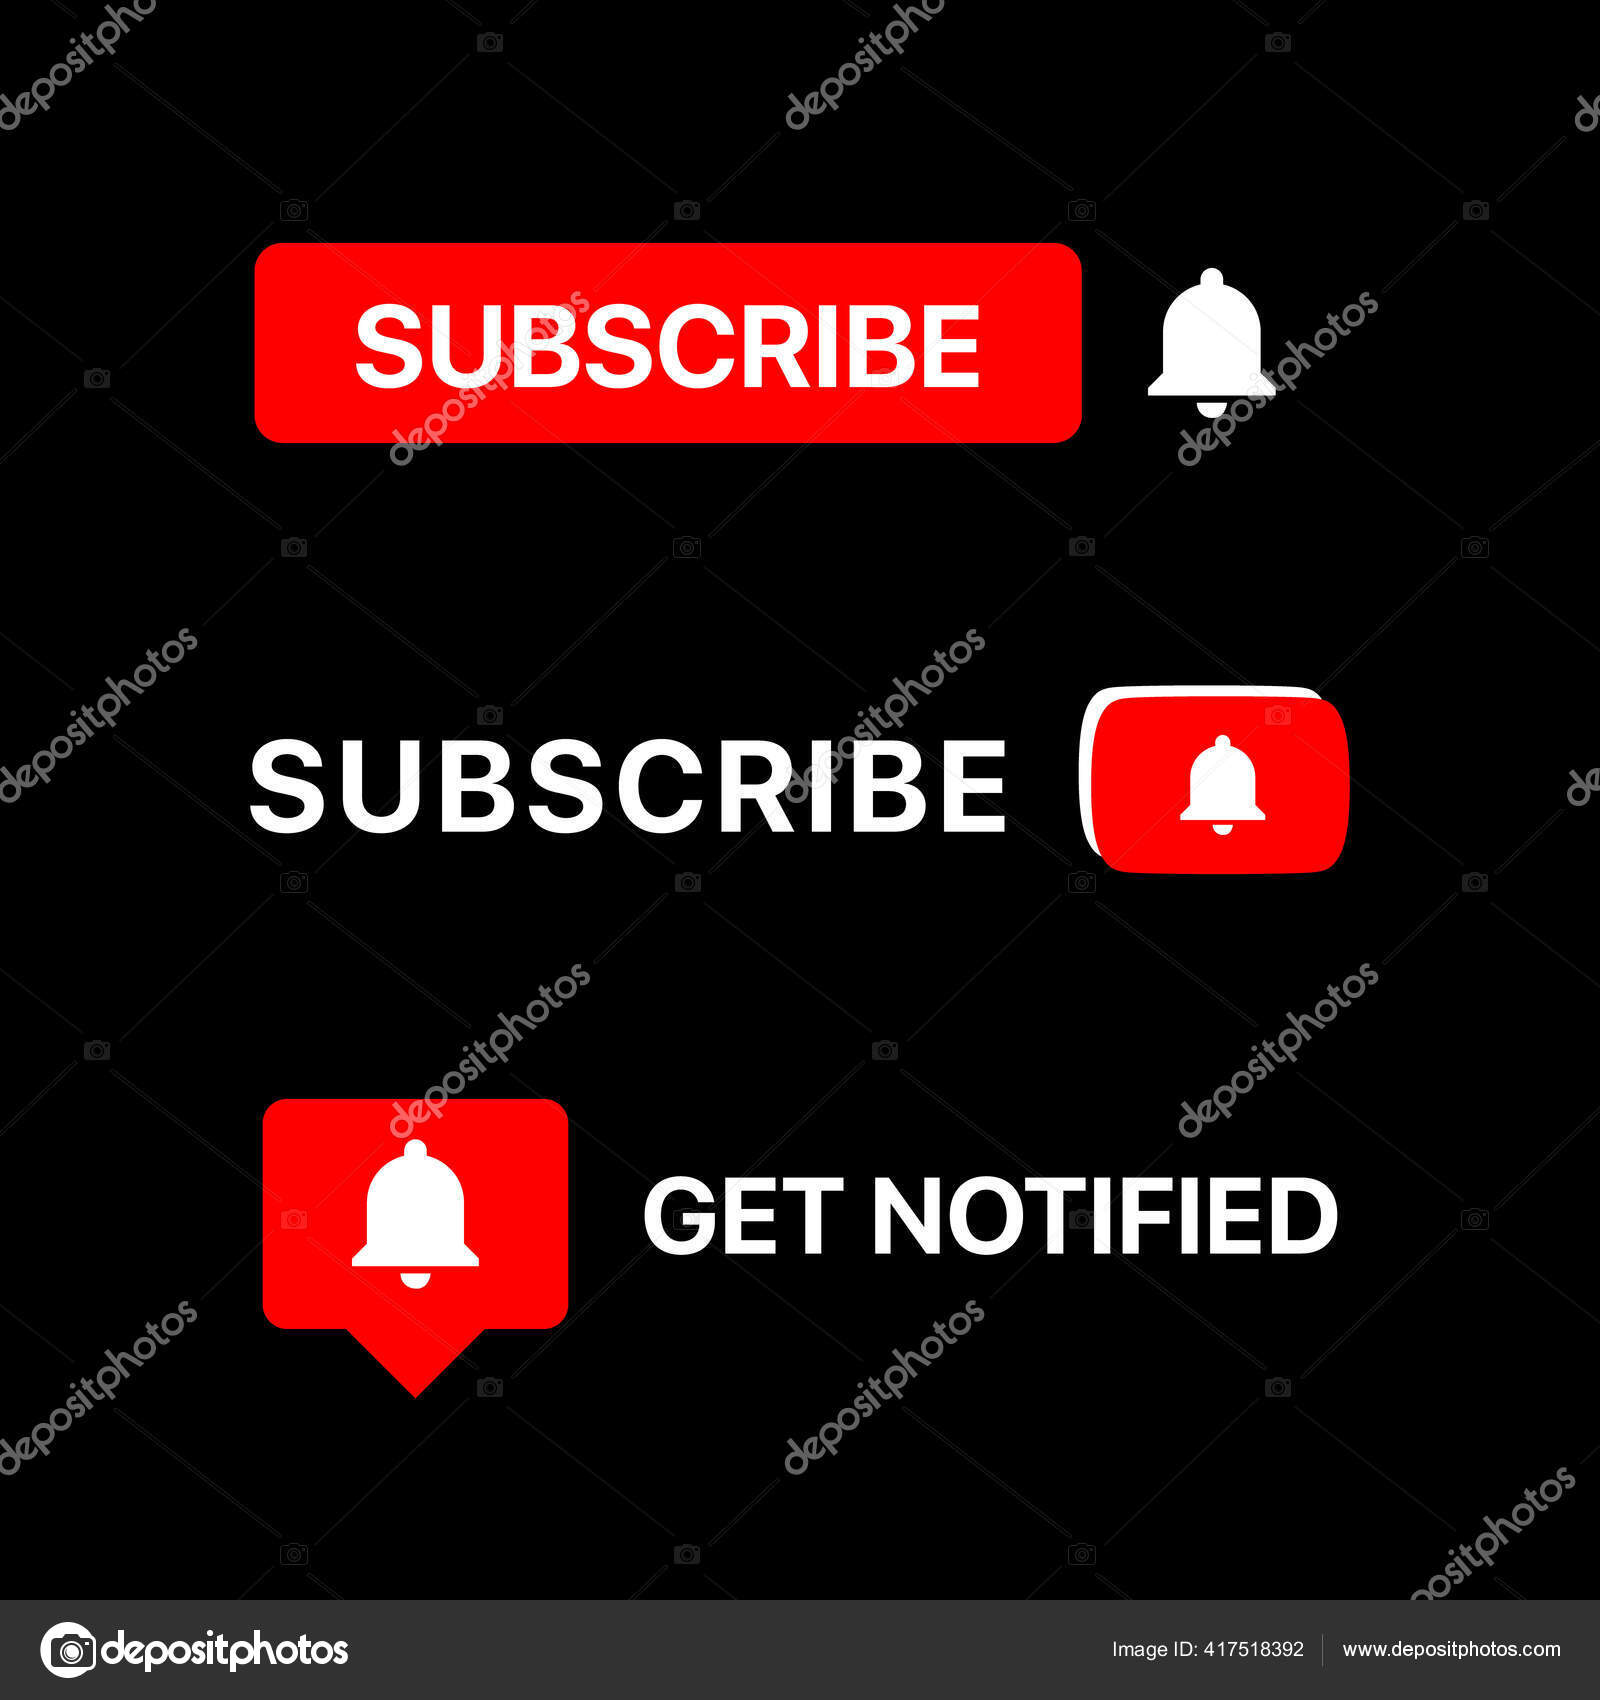 Youtube Subscribe Button Vector Art Stock Images | Depositphotos